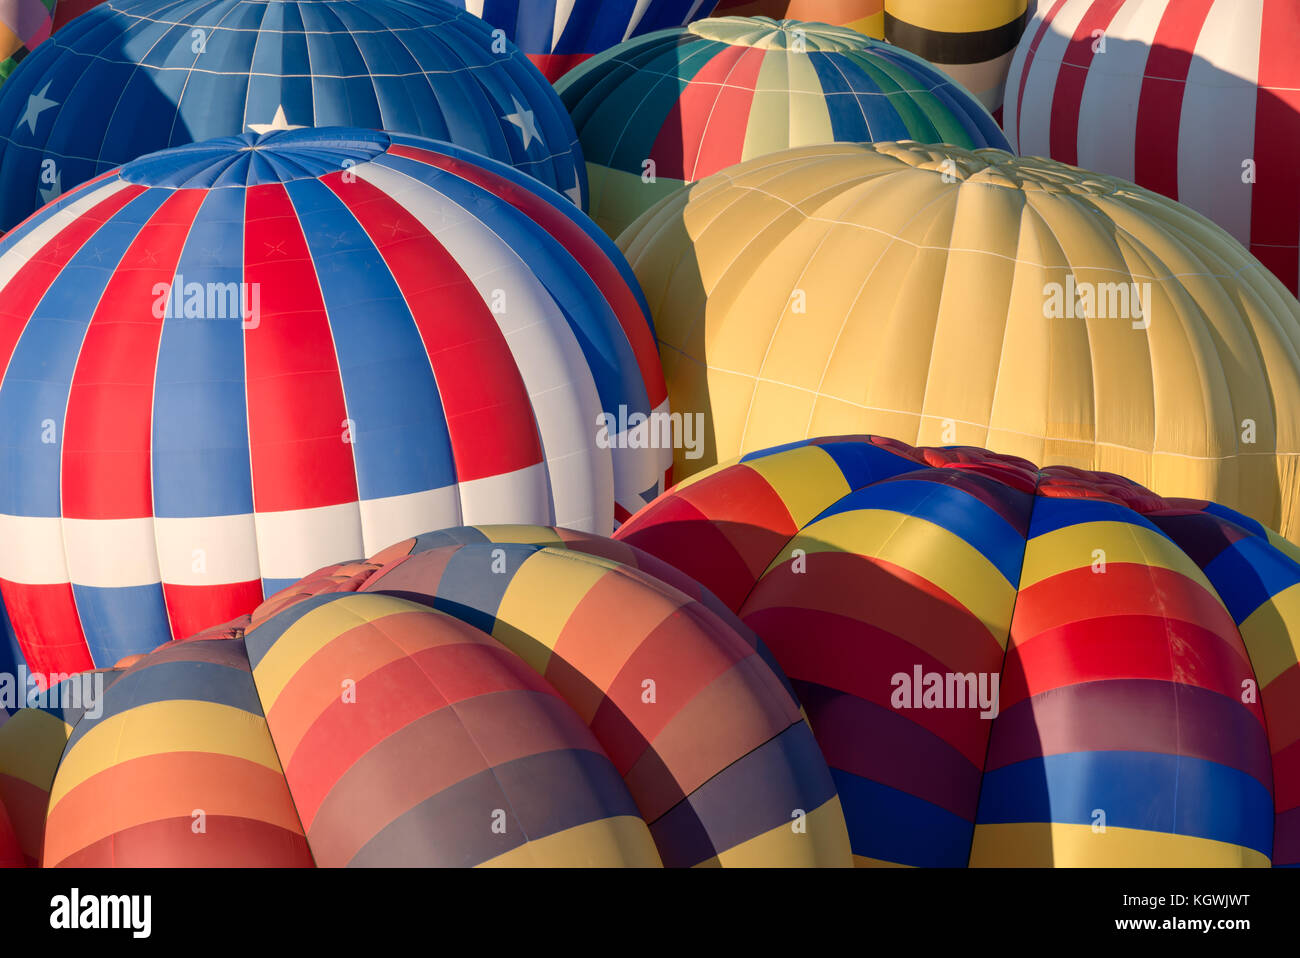 Overlooking Multiple Hot Air Balloons Stock Photo